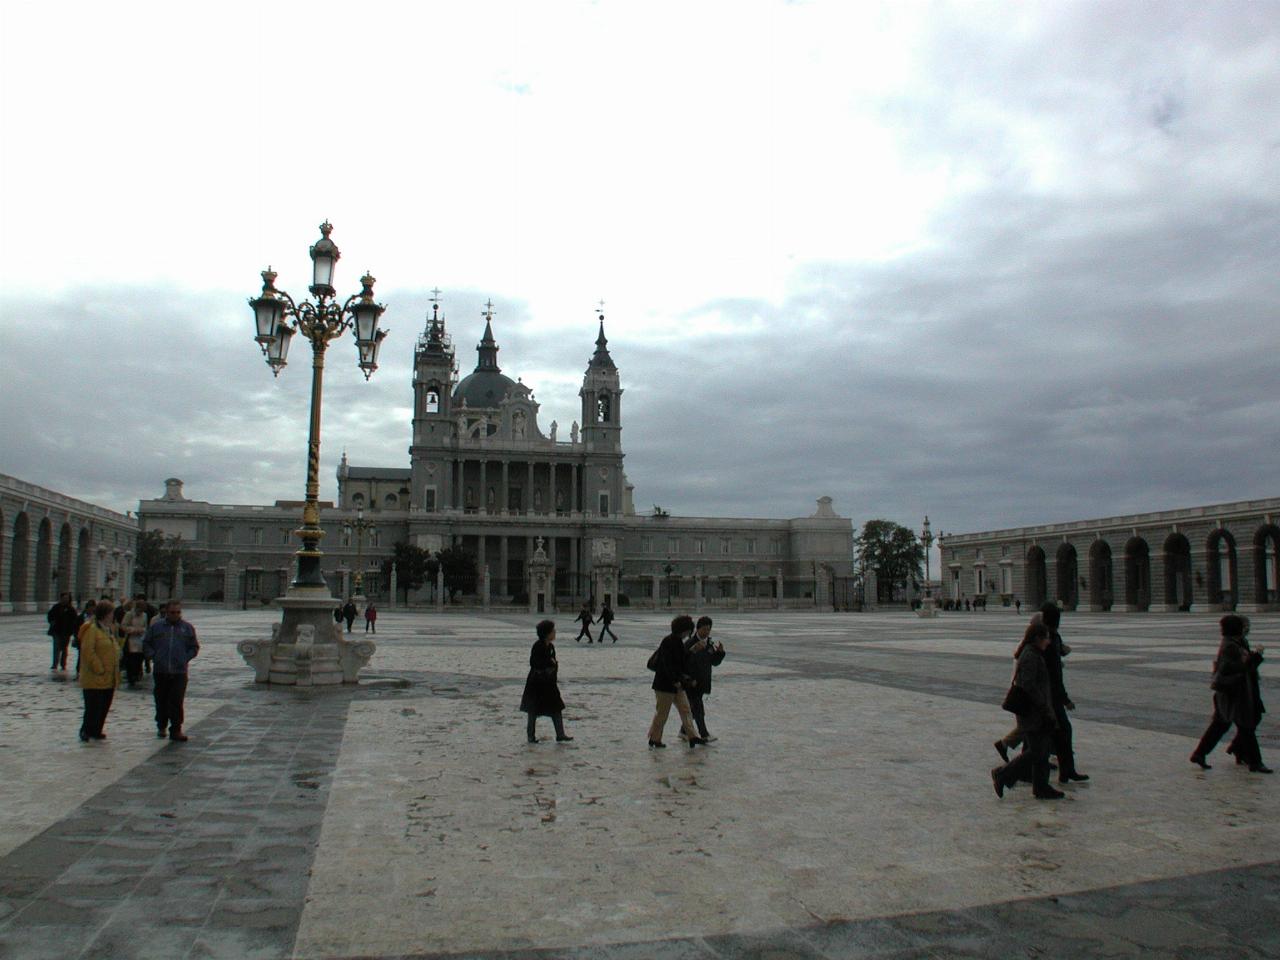 Courtyard of Royal Palace, Madrid, looking at Almudena Cathedral